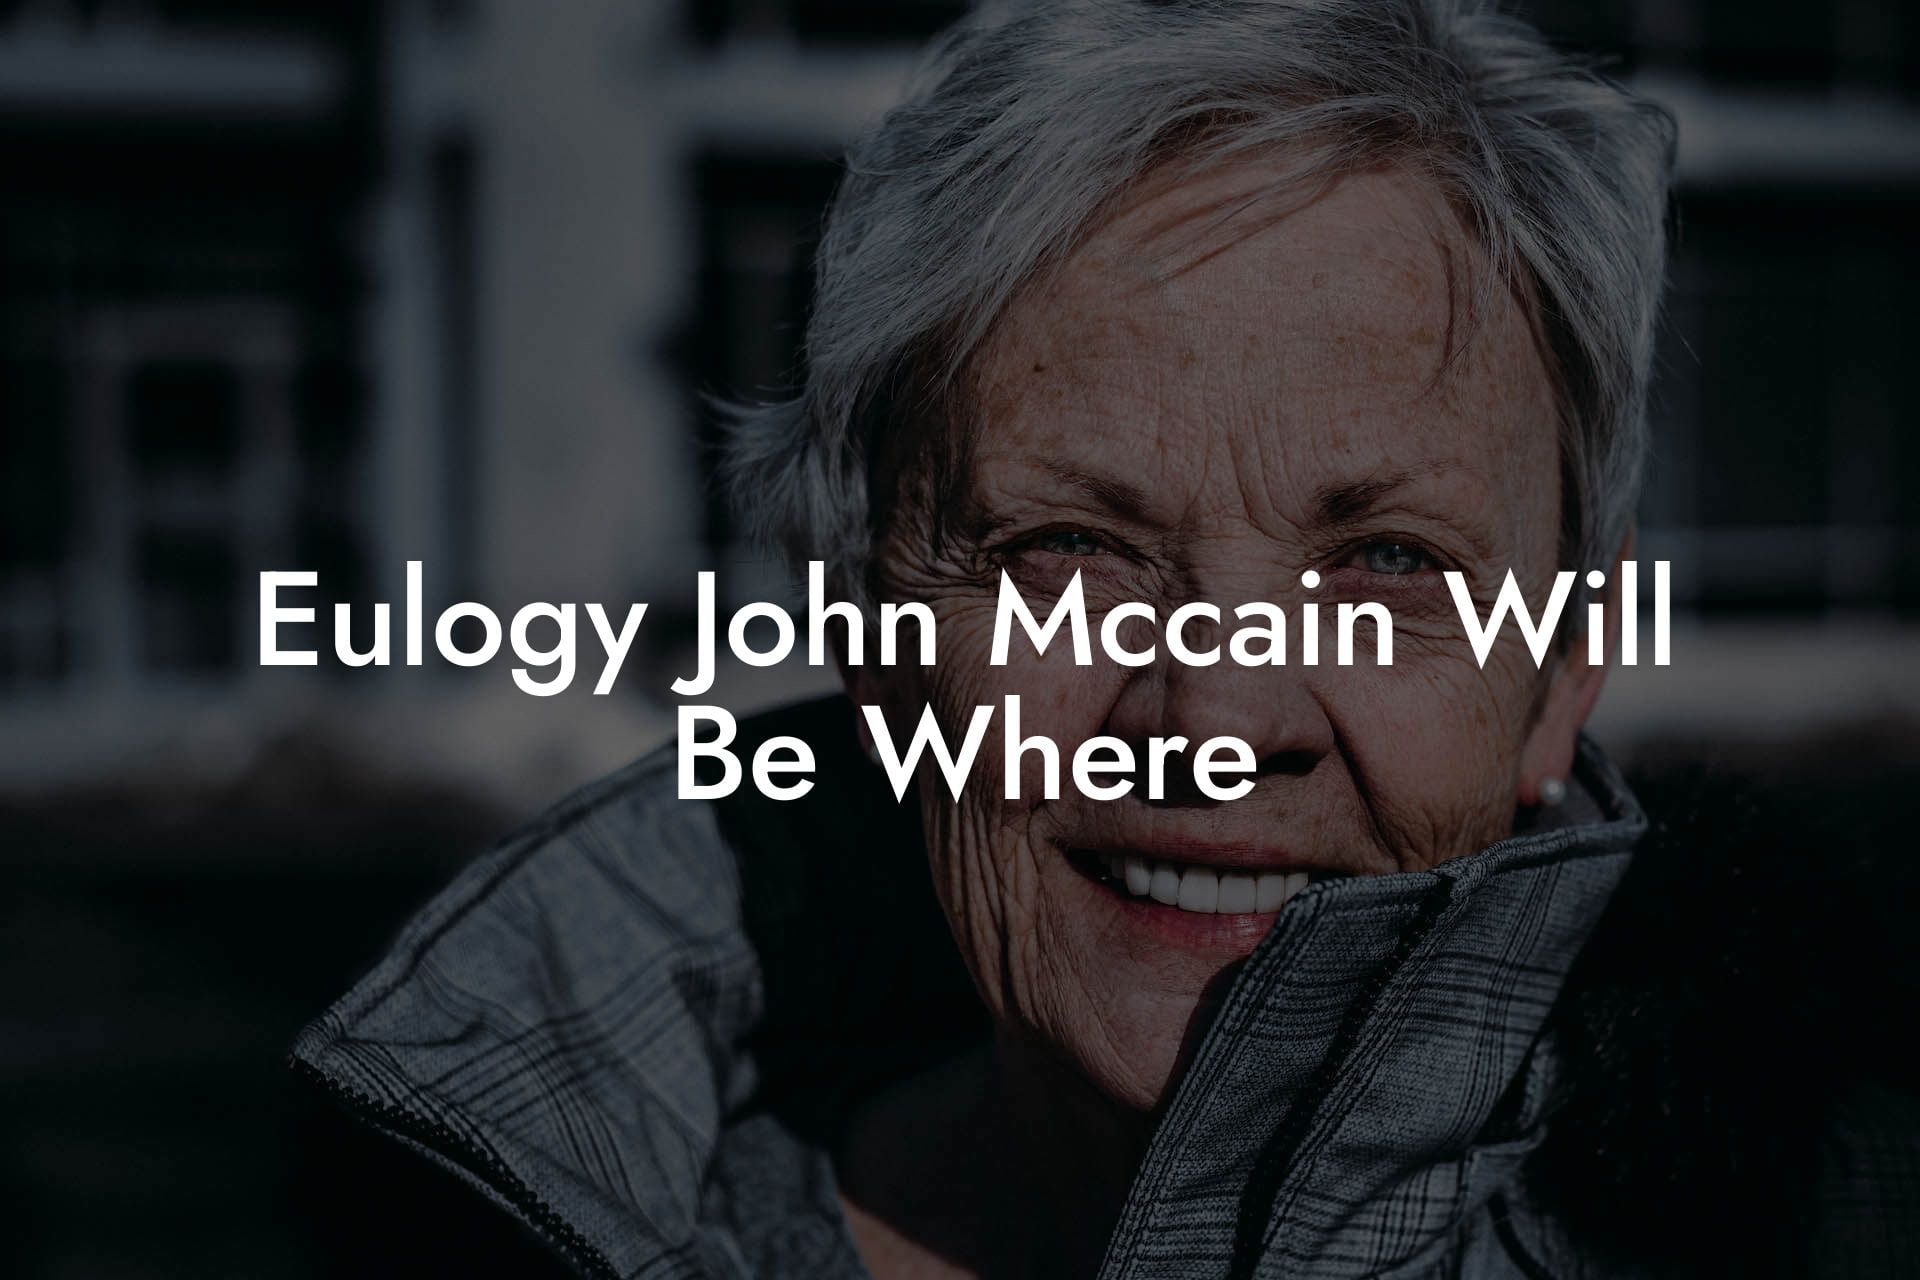 Eulogy John Mccain Will Be Where